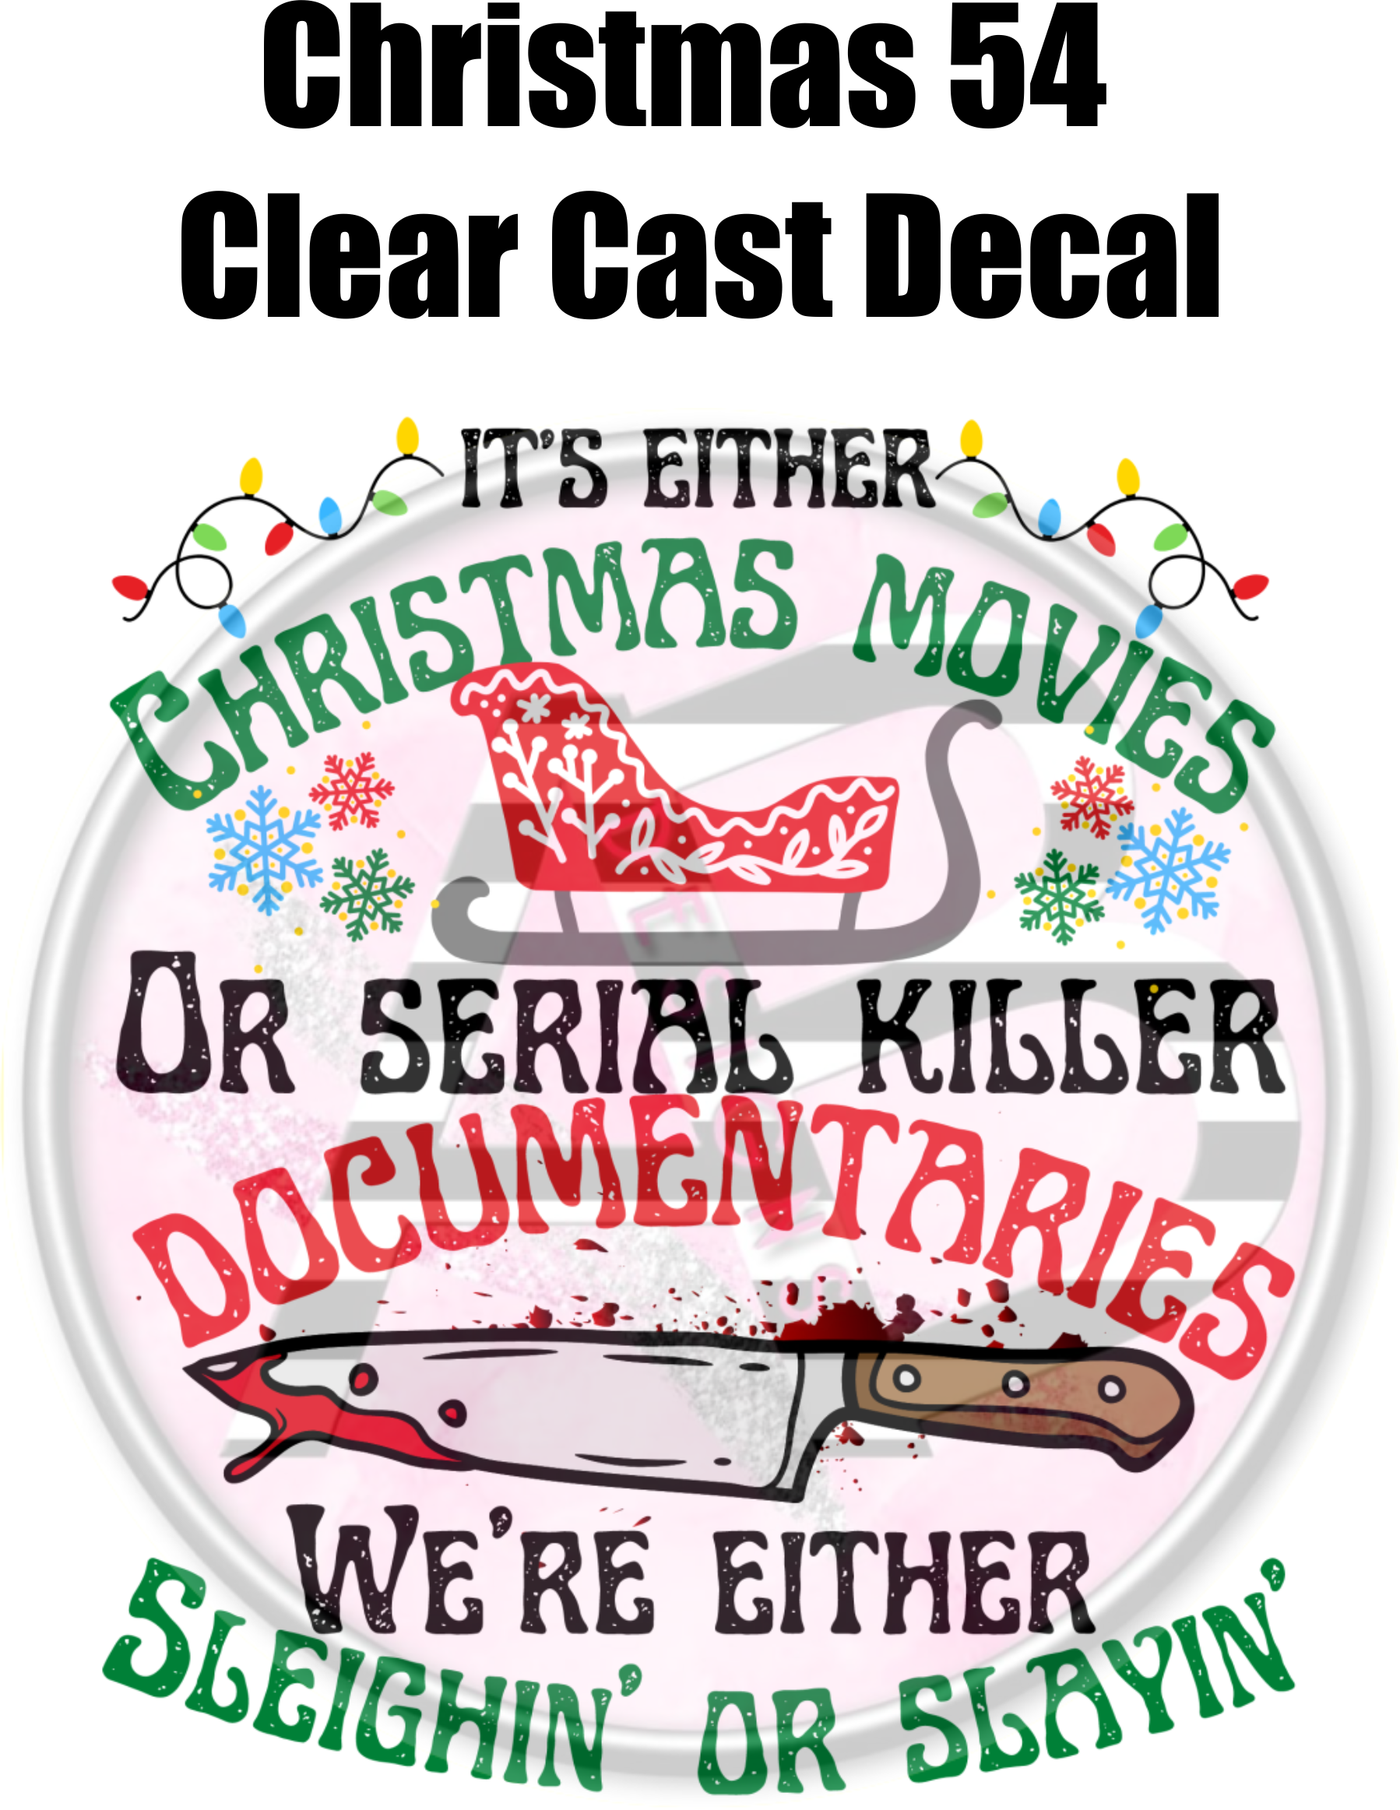 Christmas 54 - Clear Cast Decal